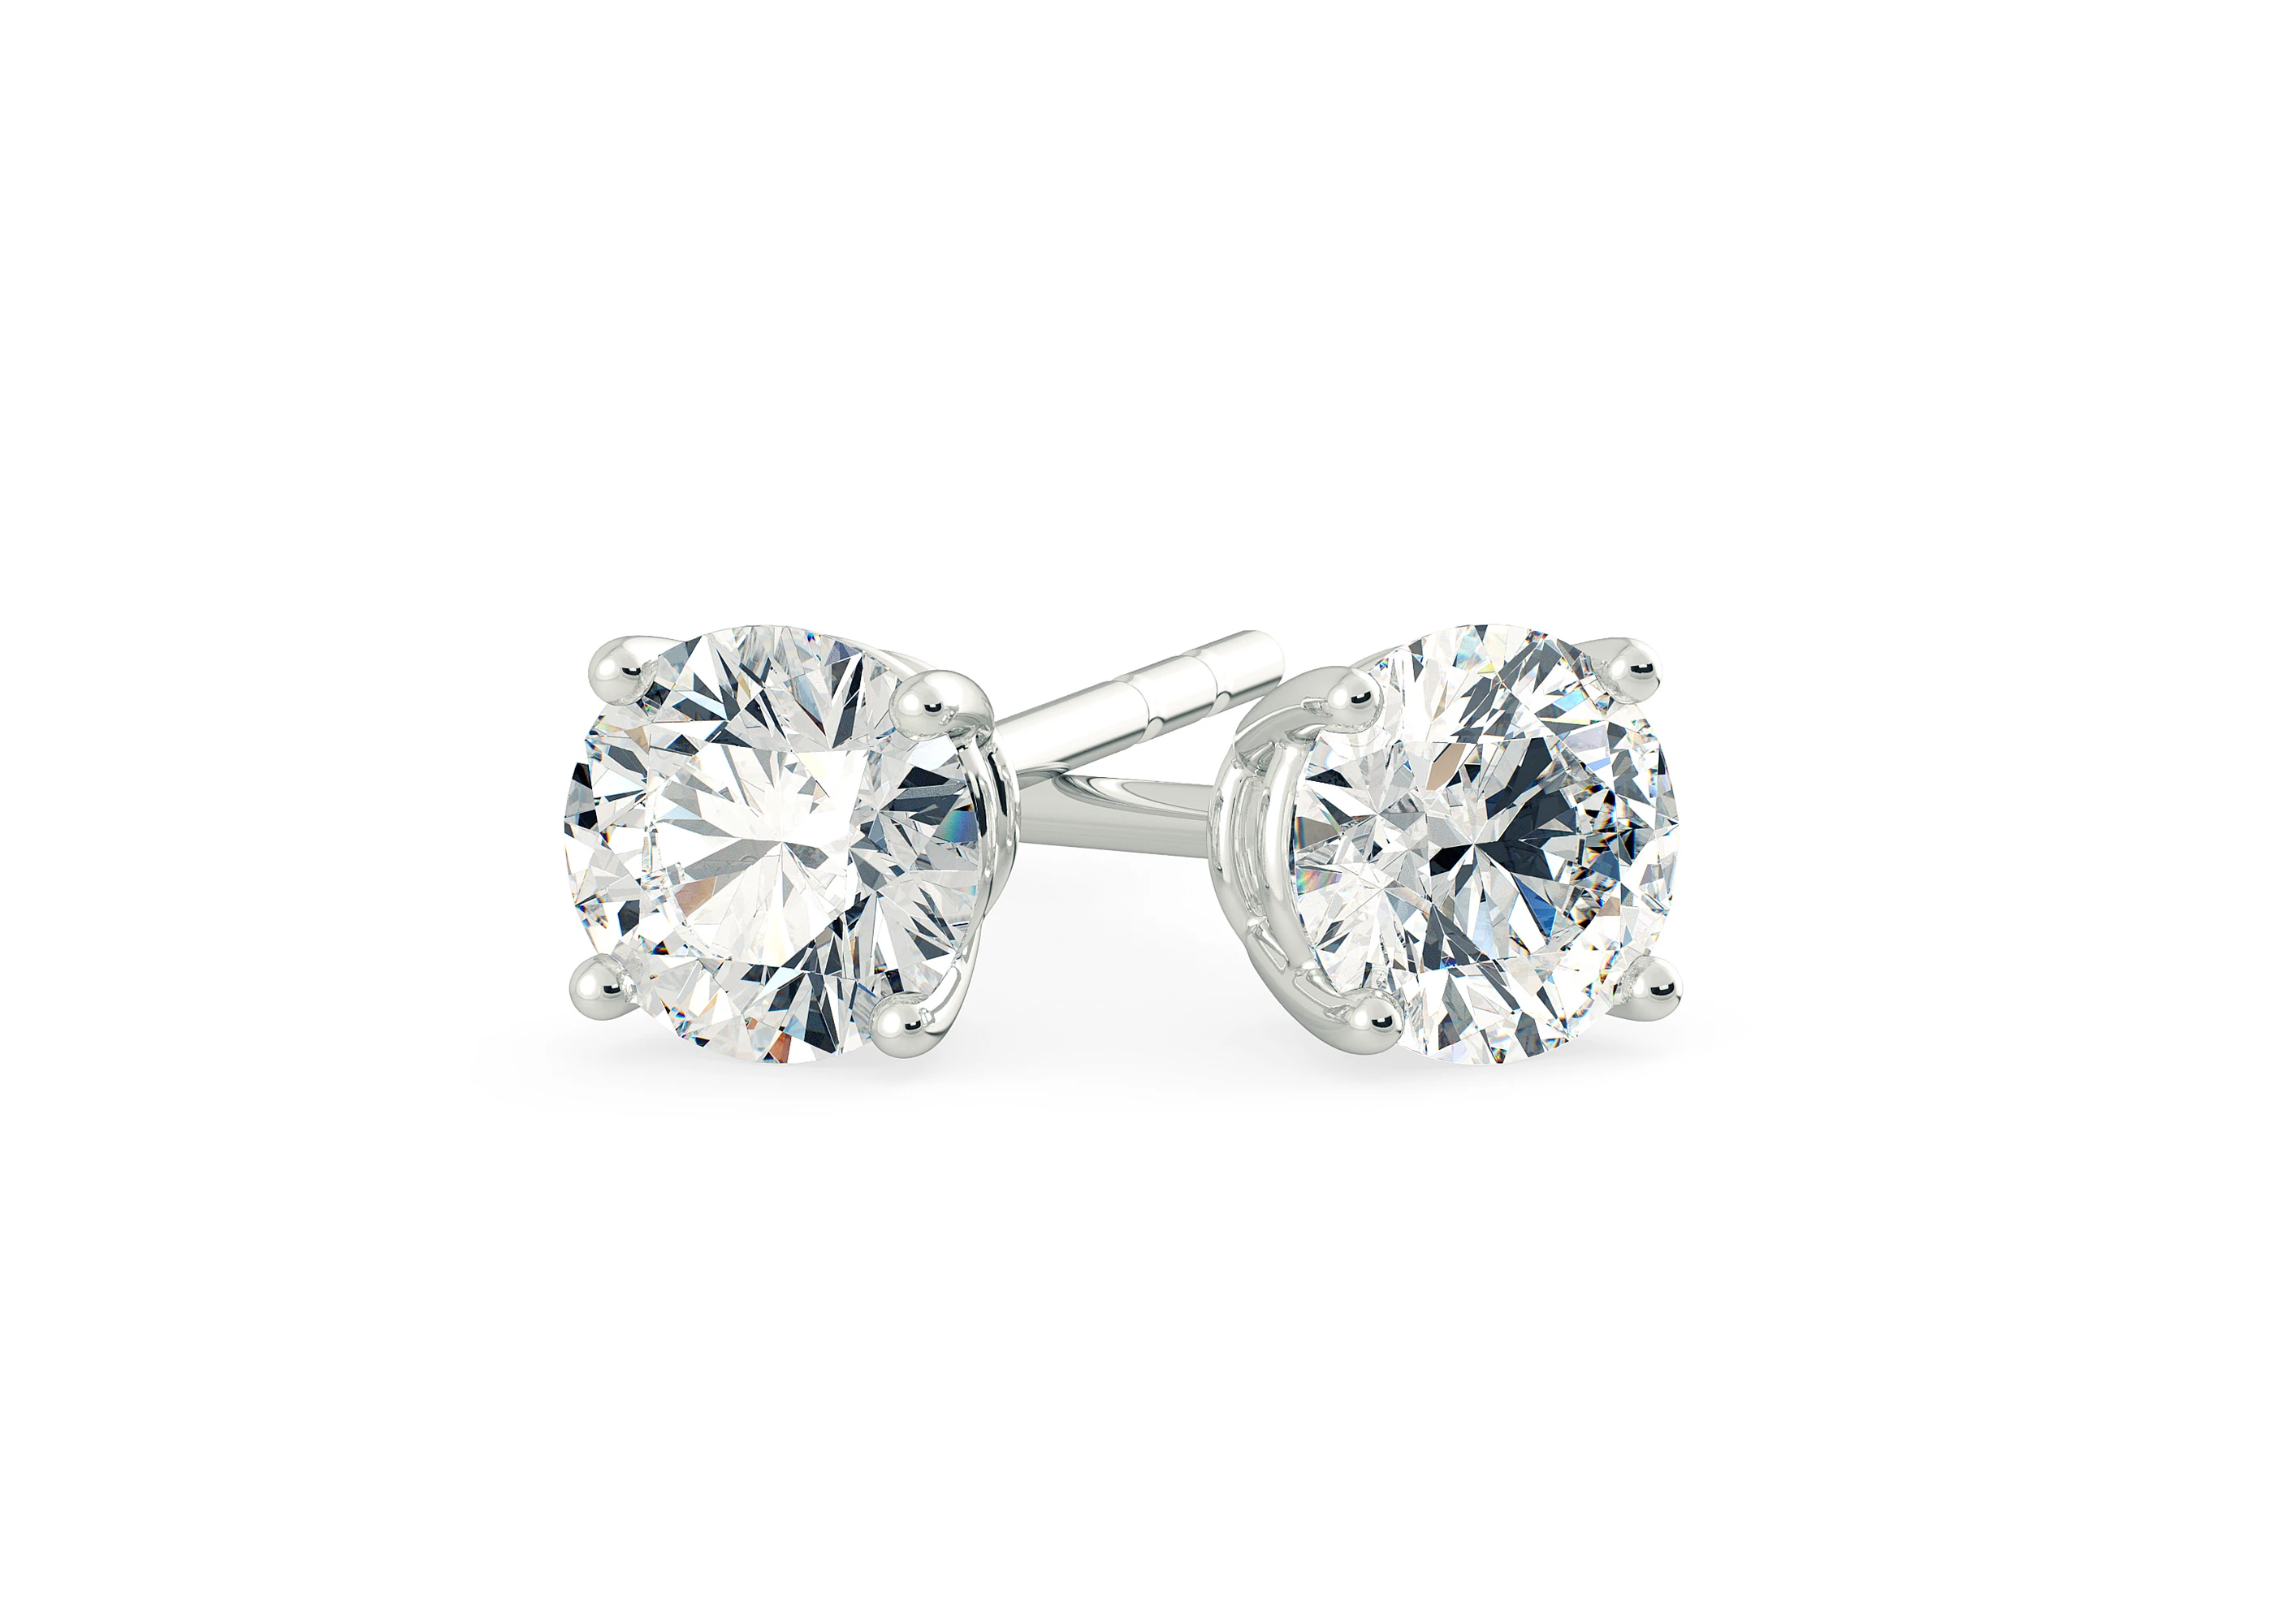 Two Carat Lab Grown Round Brilliant Diamond Stud Earrings in Platinum 950